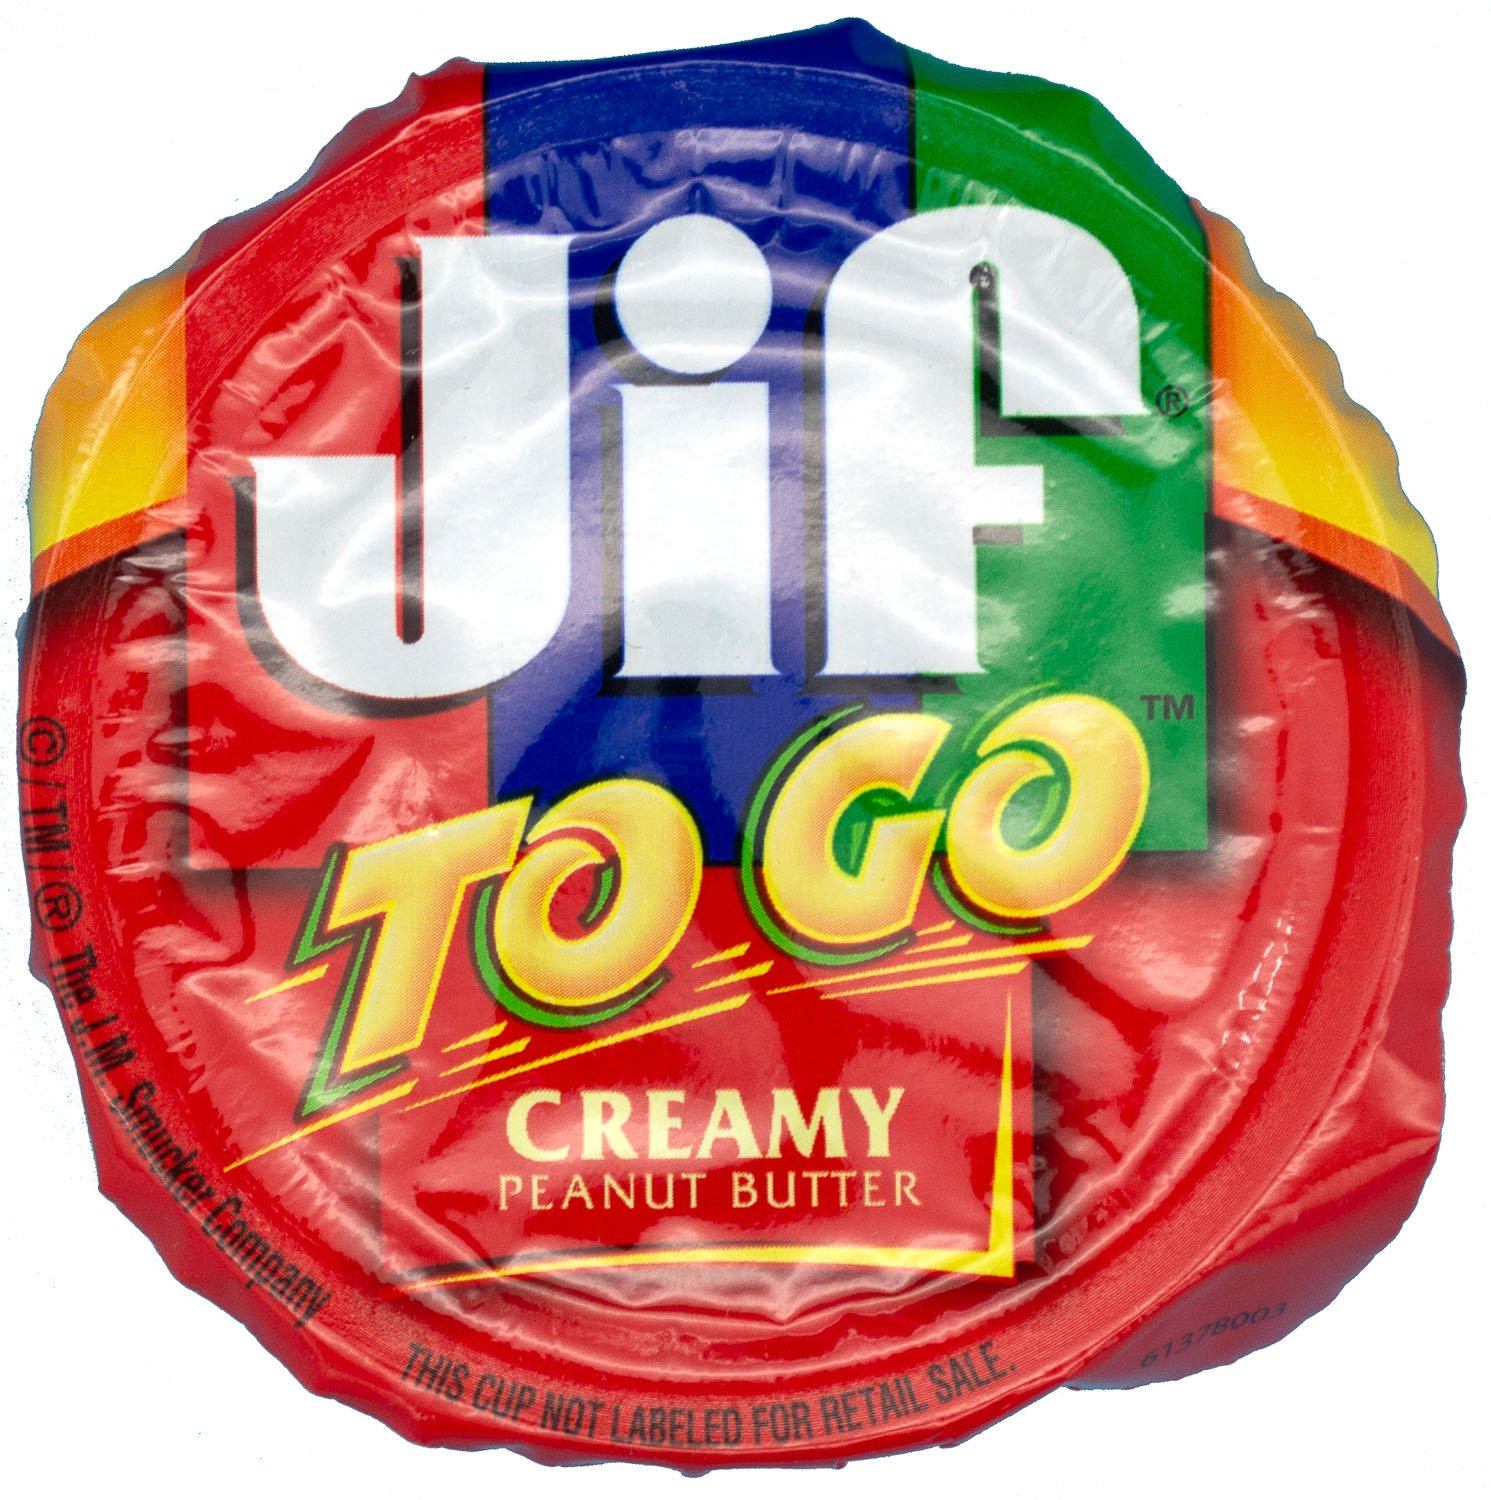 Jif To Go Creamy Peanut Butter To Go, 1.5 Ounce Jif 